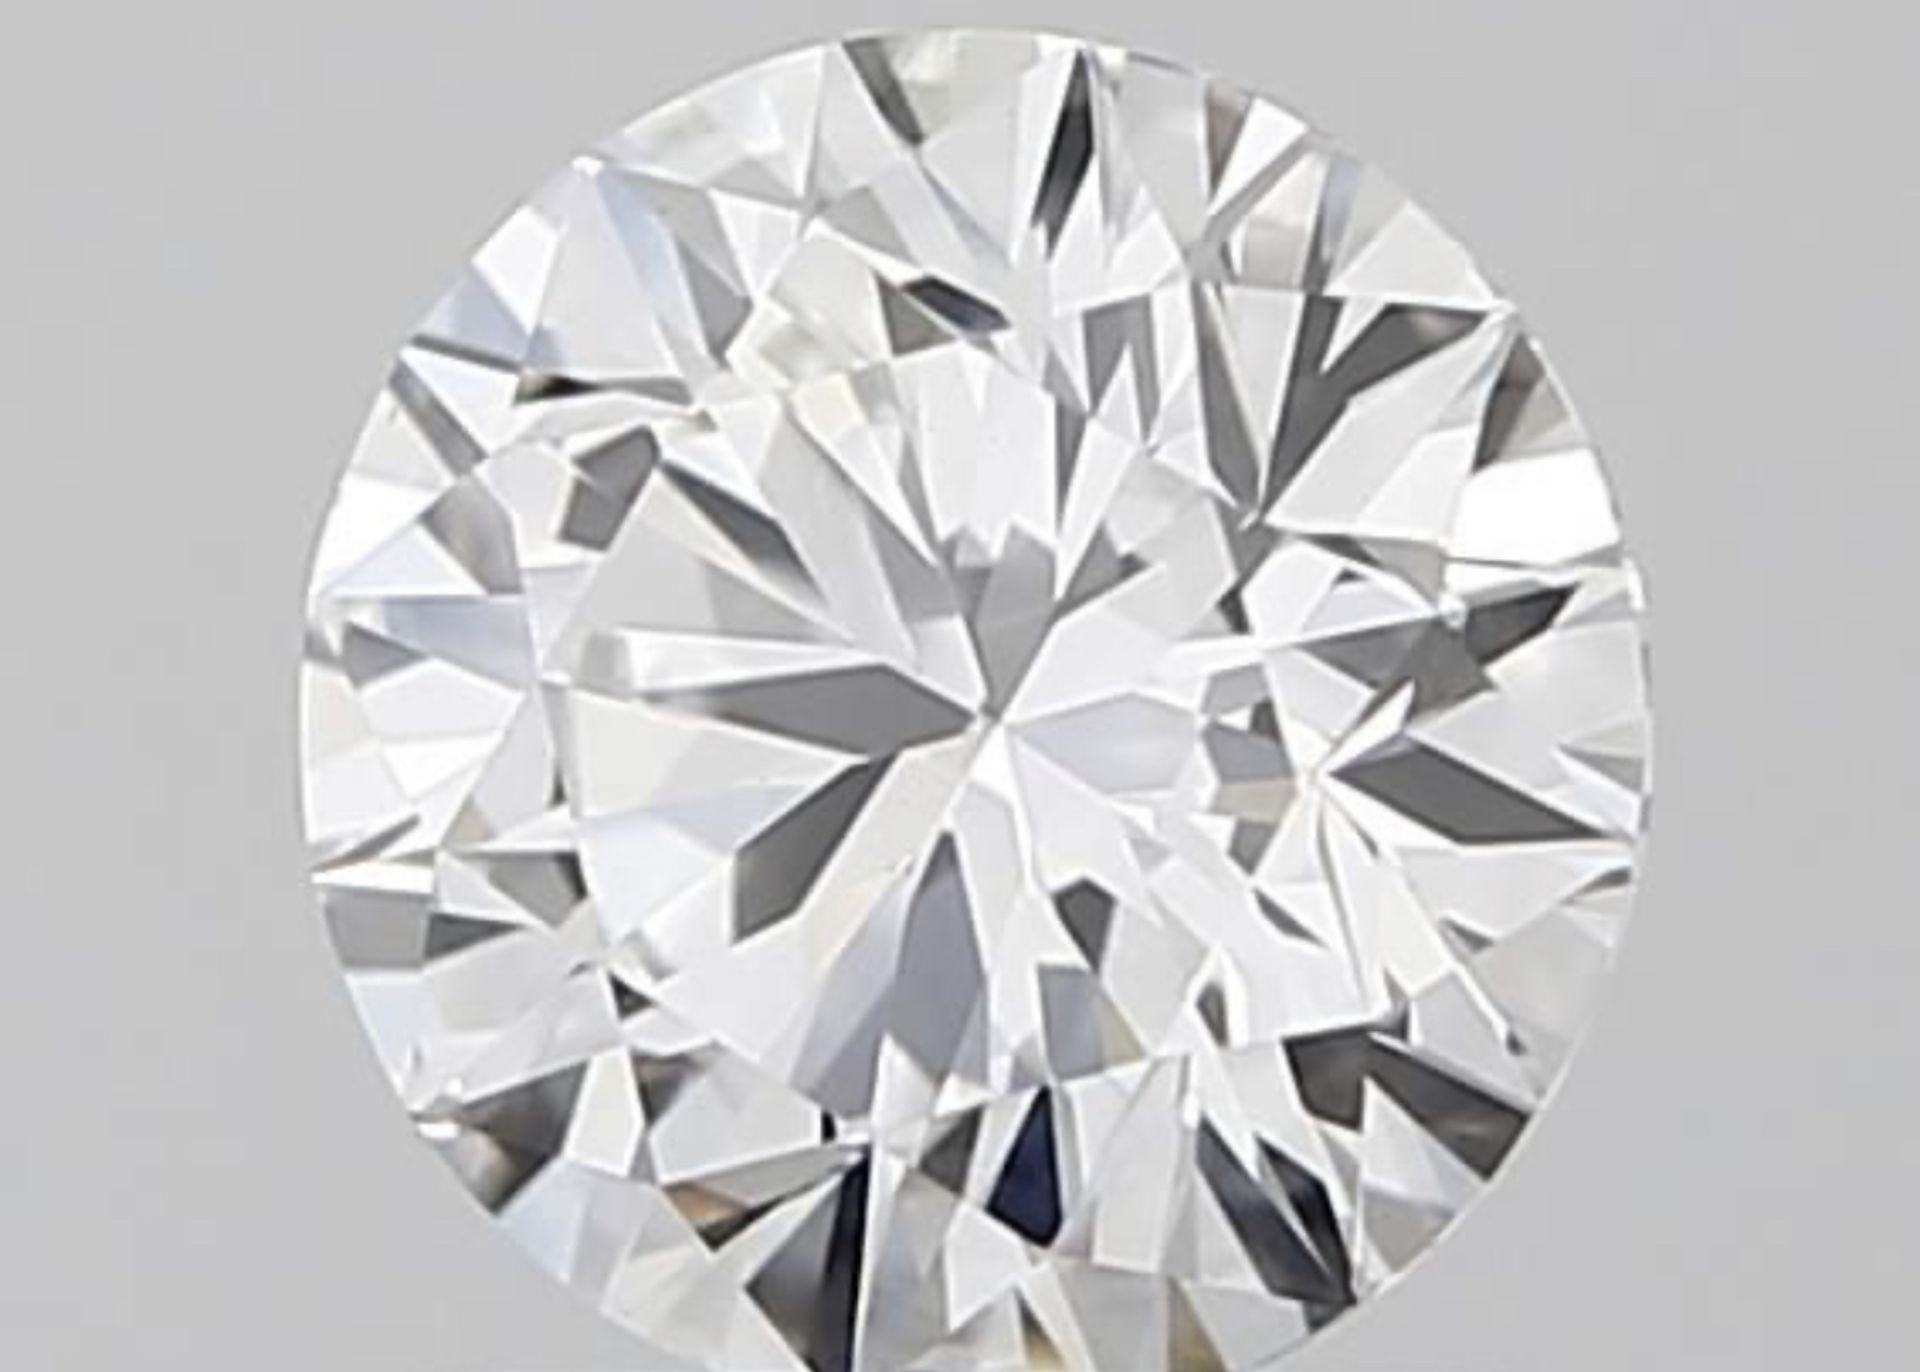 ** ON SALE ** Single -IGI Round Brilliant Cut Diamond E Colour VVS2 Clarity 1.02 Carat - LG574342538